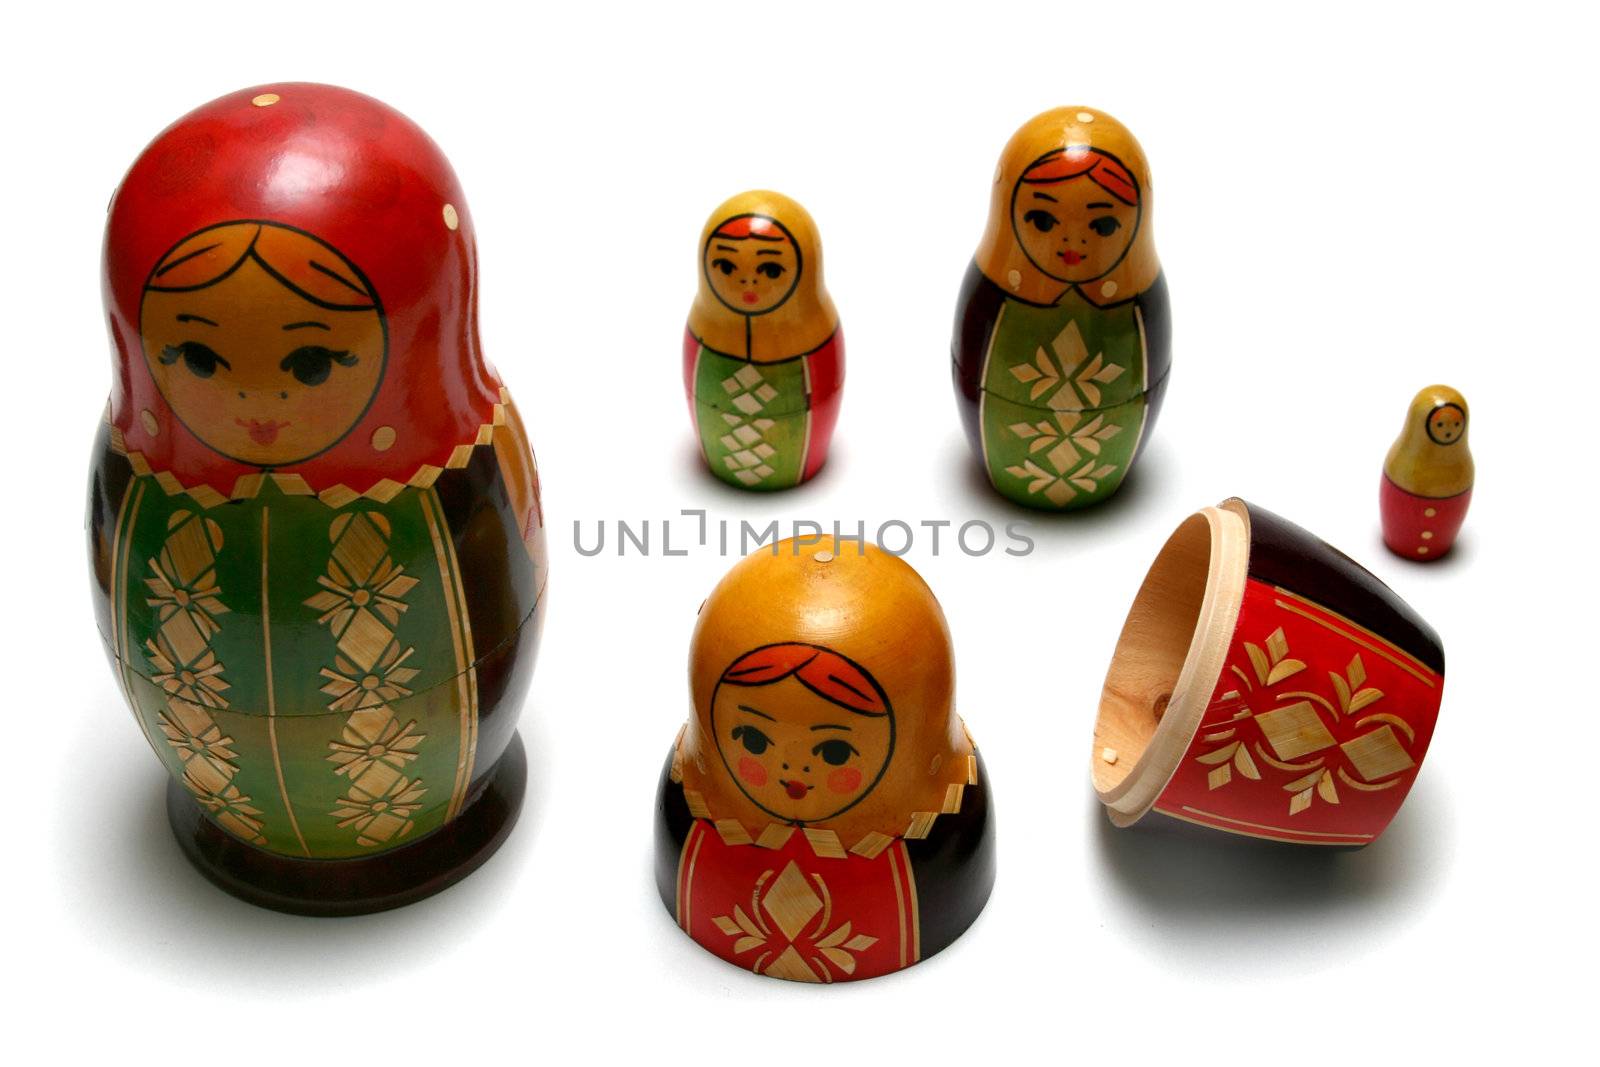 Disassembled russian matreshka toys by Gdolgikh